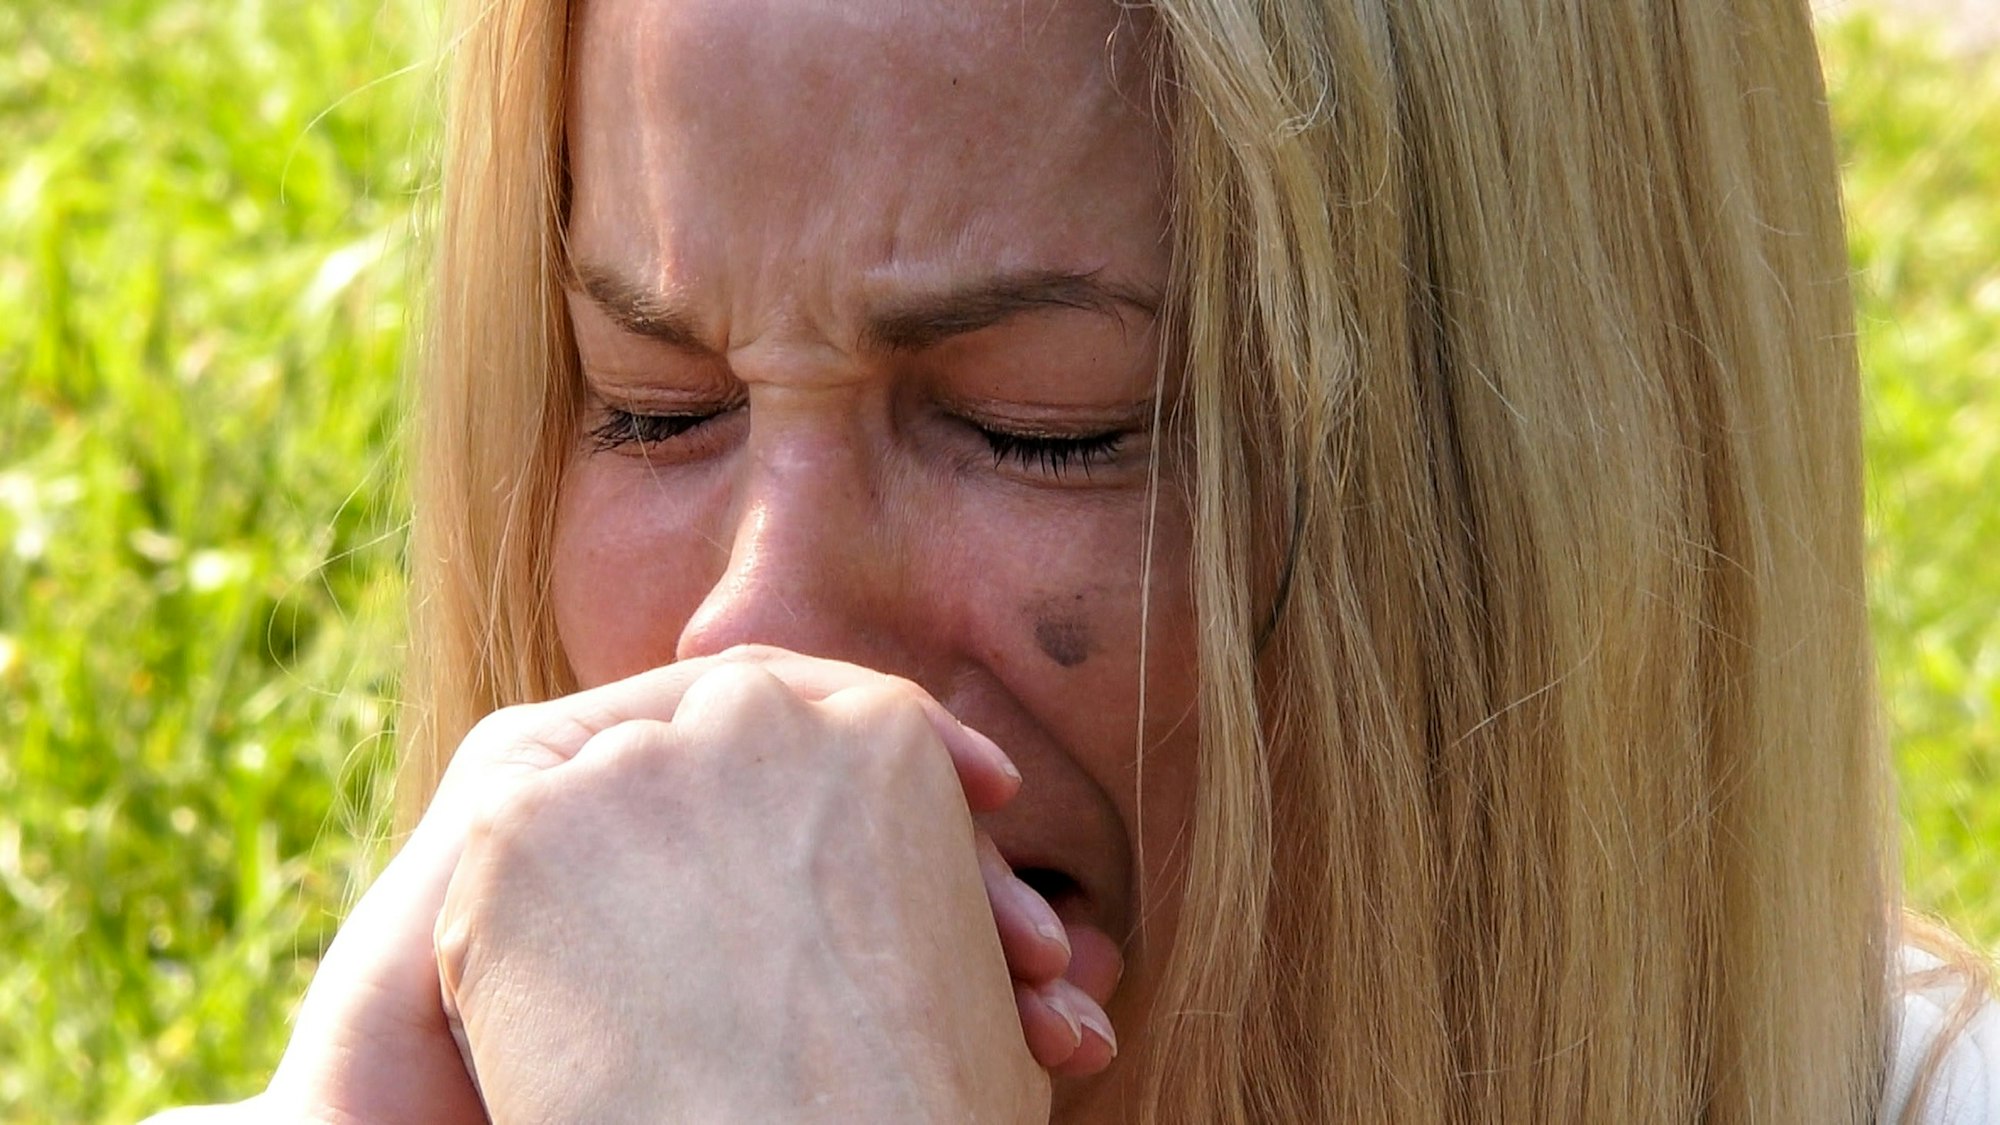 Michelle Monballijn weint bittere Tränen. Foto: RTL